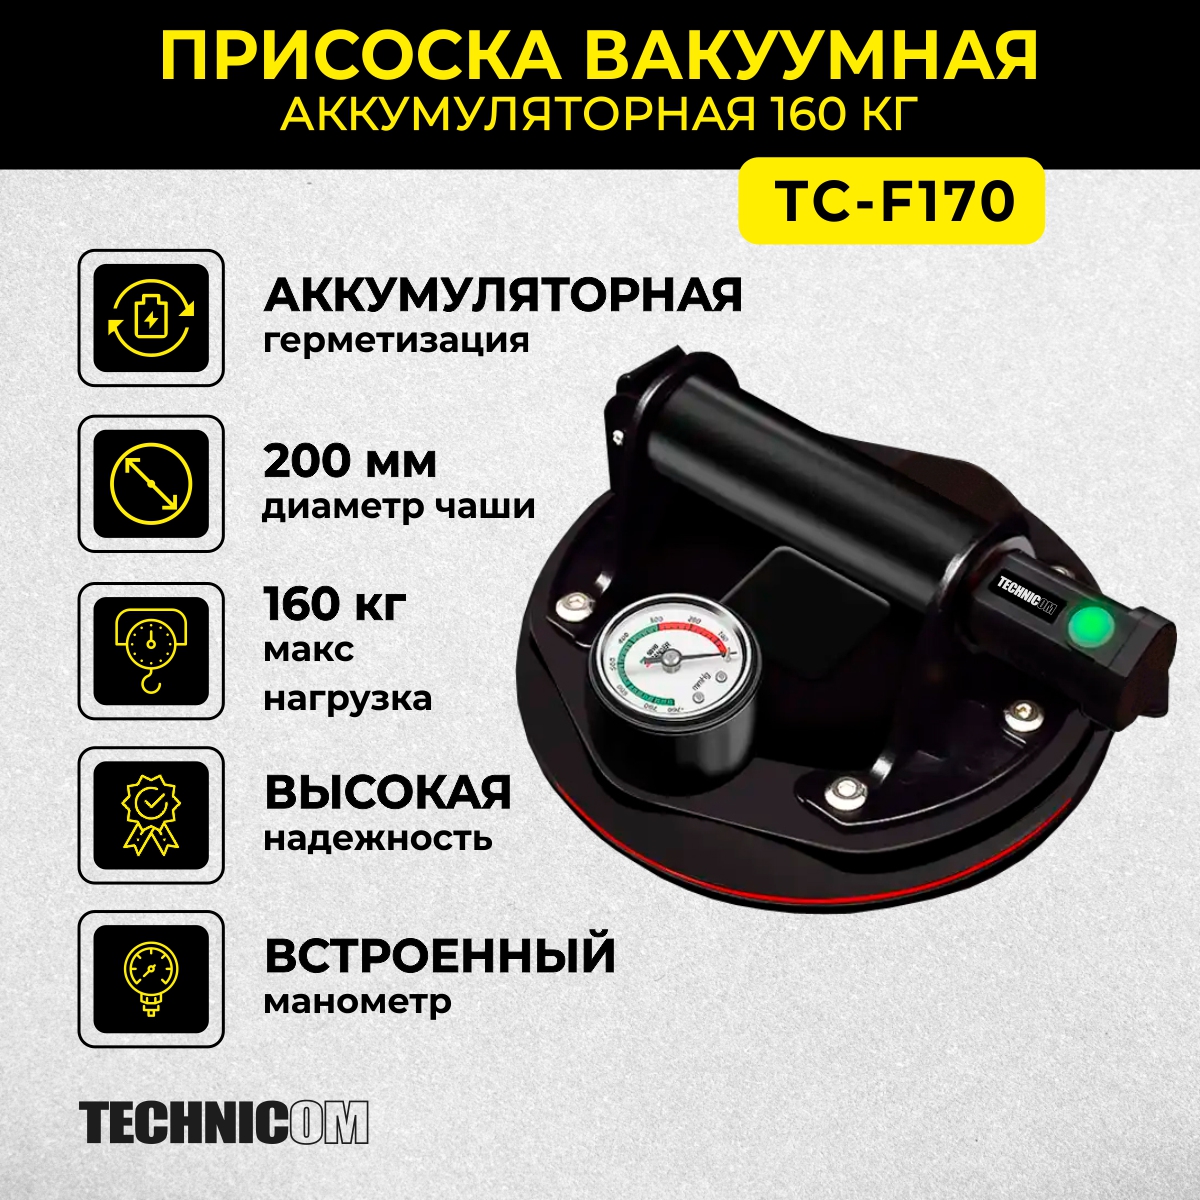 Присоска вакуумная аккумуляторная TECHNICOM TC-F170 присоска вакуумная алюминиевая technicom 3 чашки 120 мм tc l3110